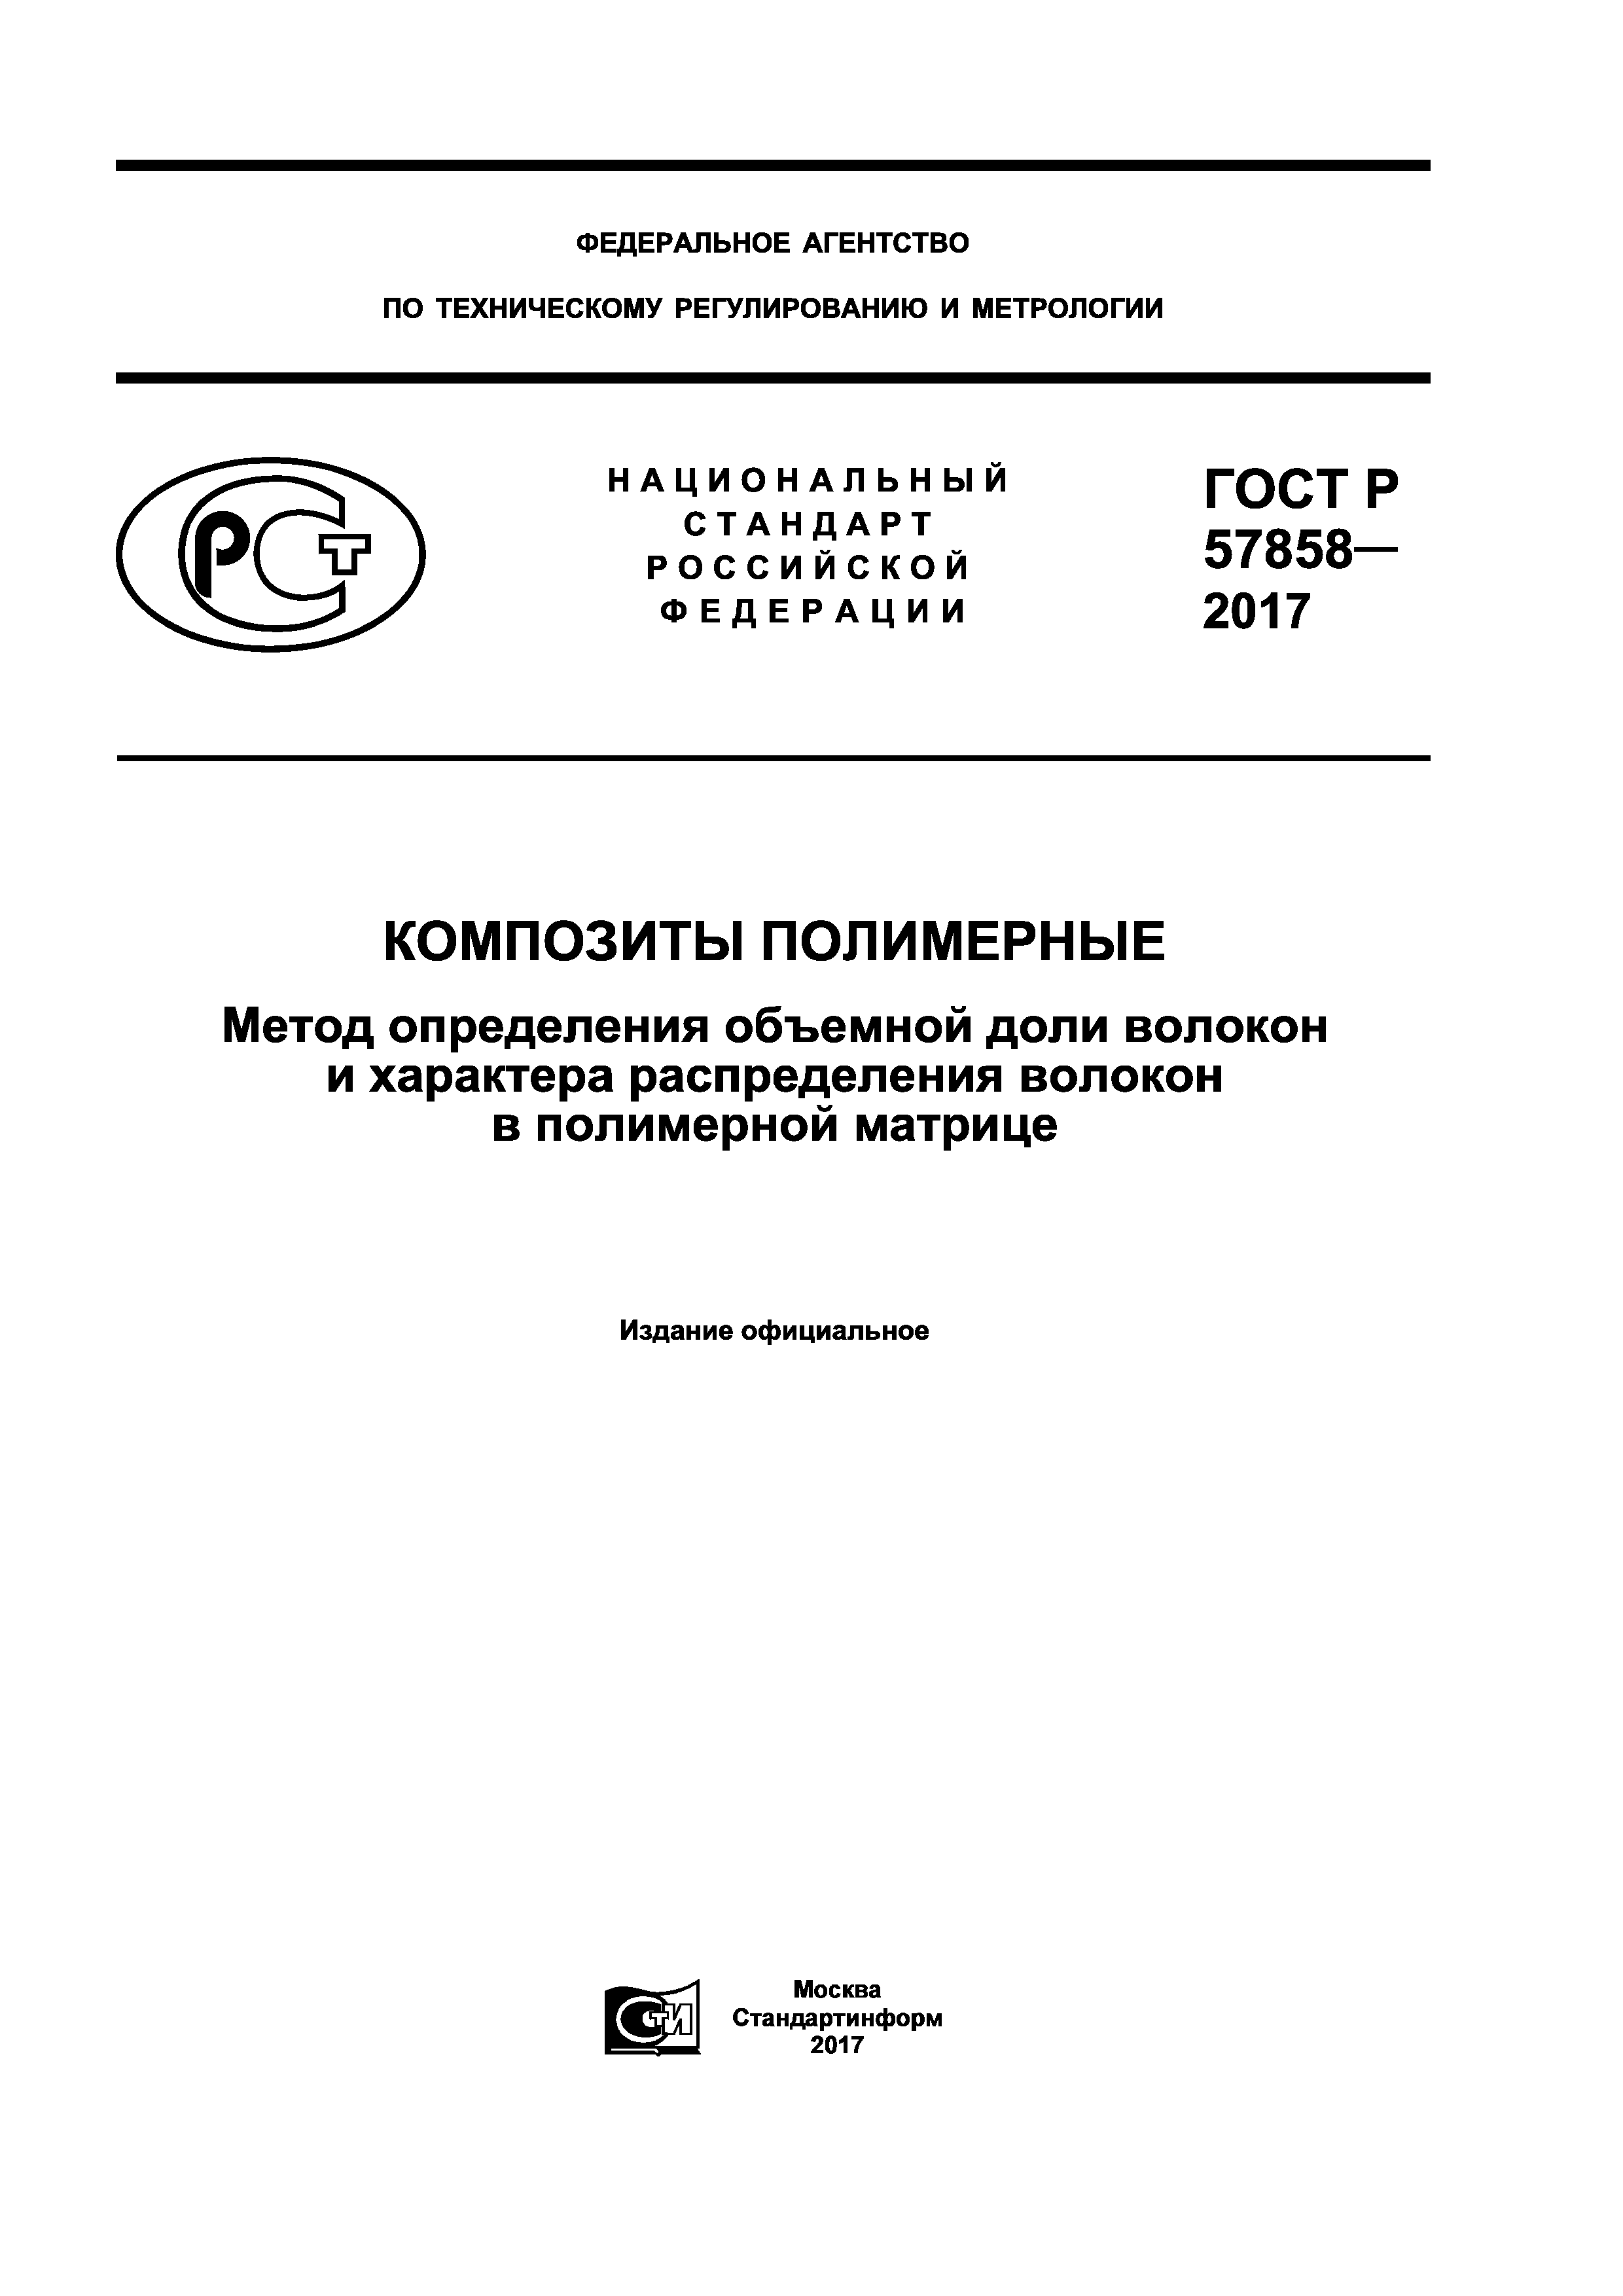 ГОСТ Р 57858-2017